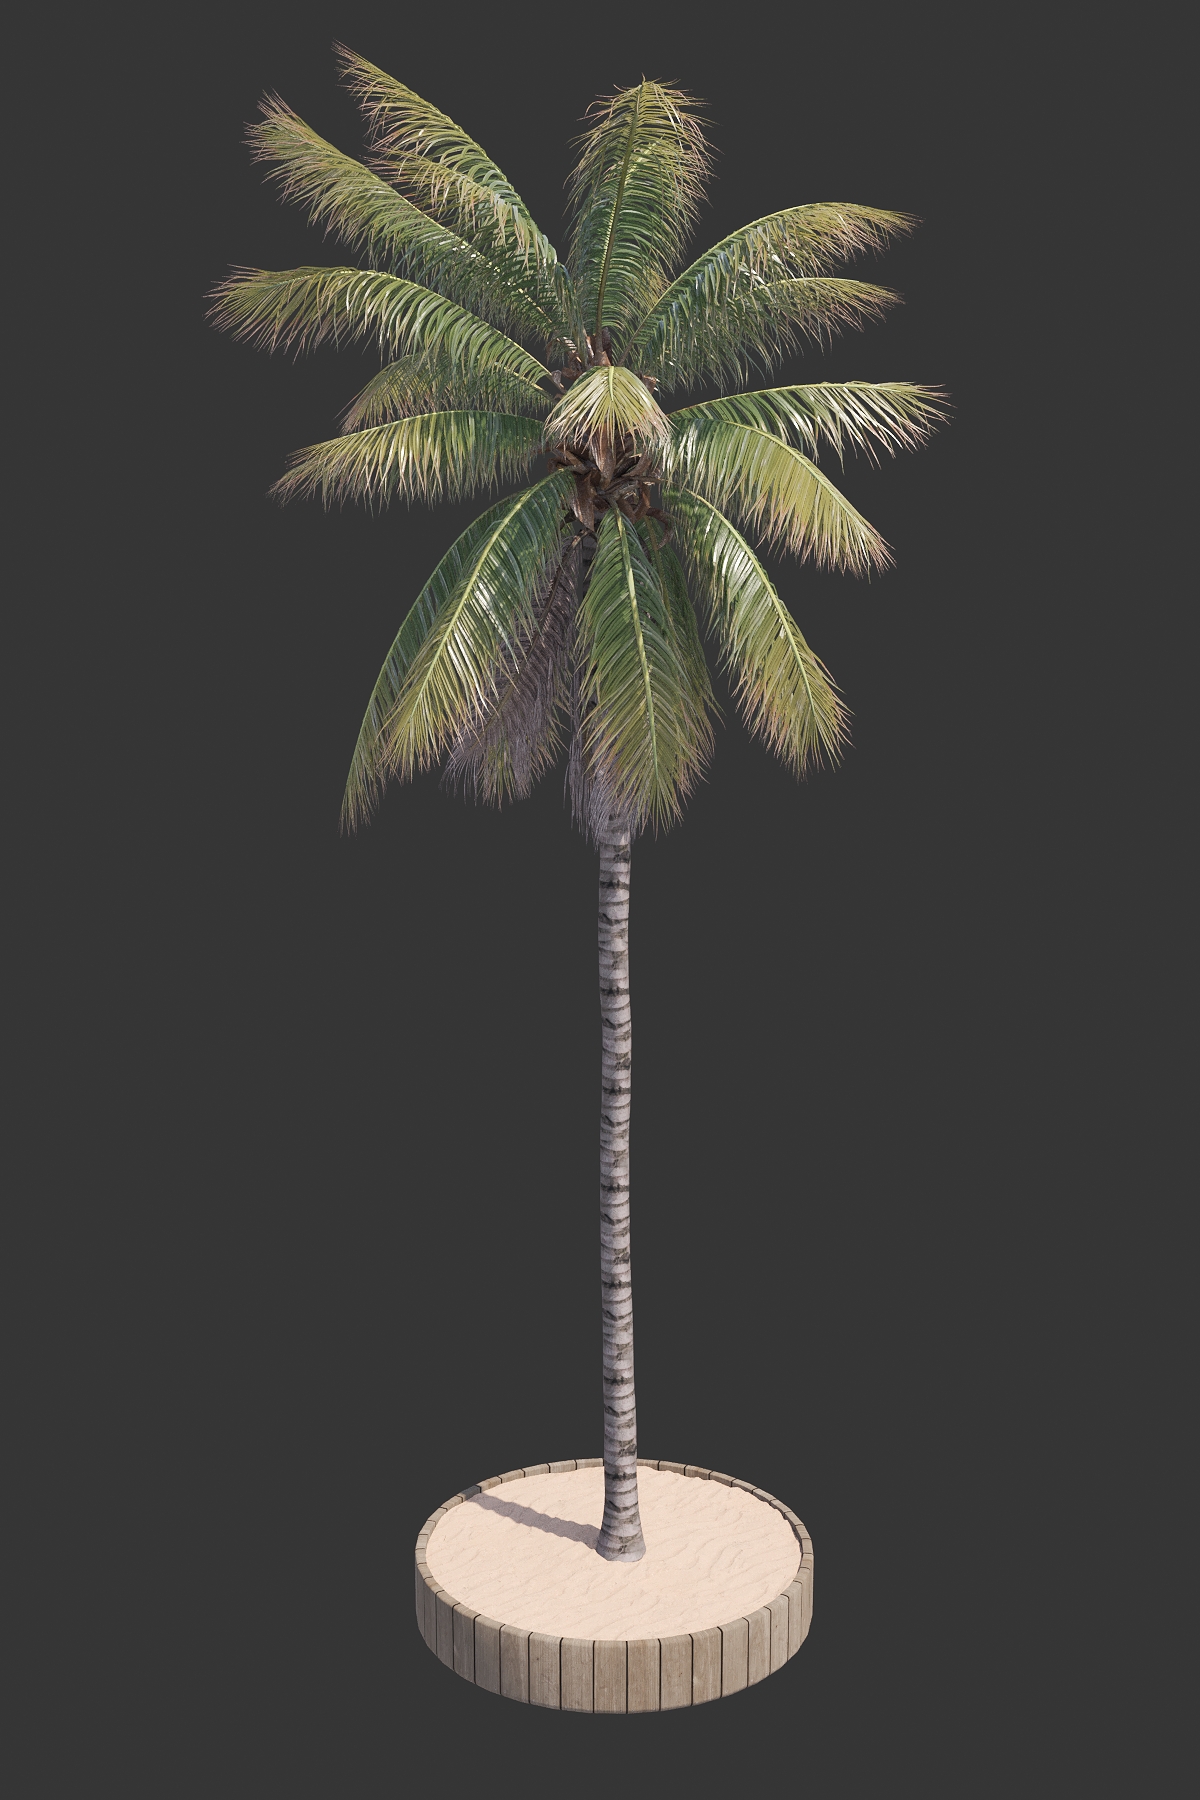 16. POHON KELAPA VOL 1 (COCONUT TREE)